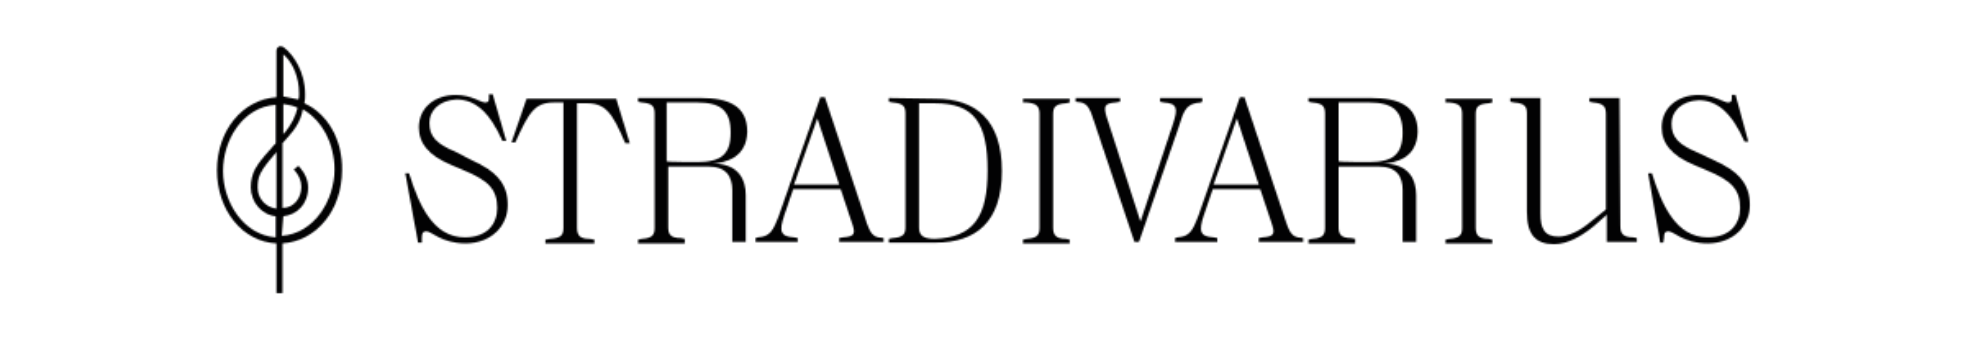 Stradivarius_logo.svg